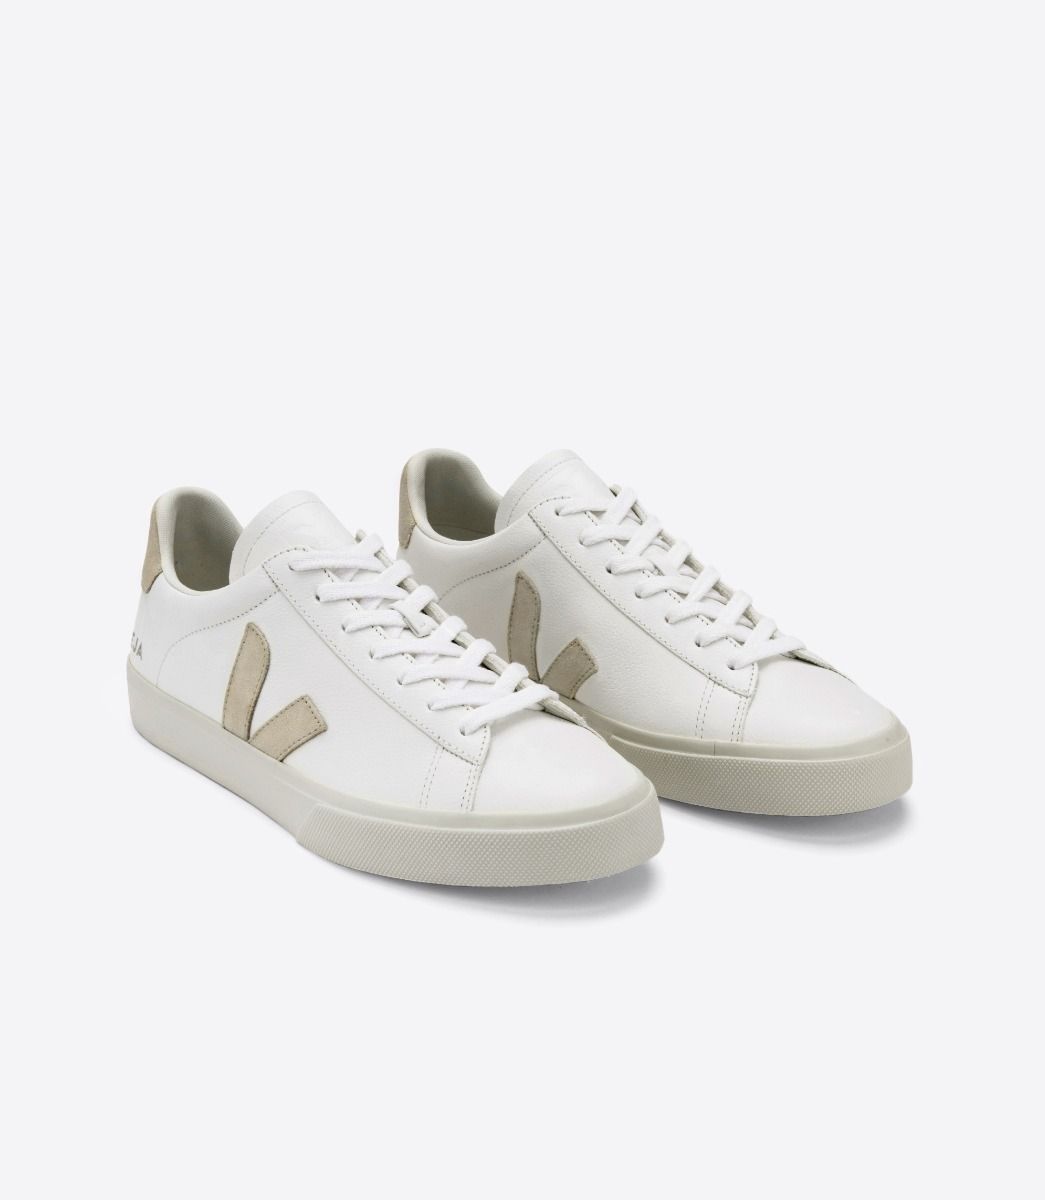 Veja Campo Chromefree Leder-Sneaker in Weiß mit Mandelmuster